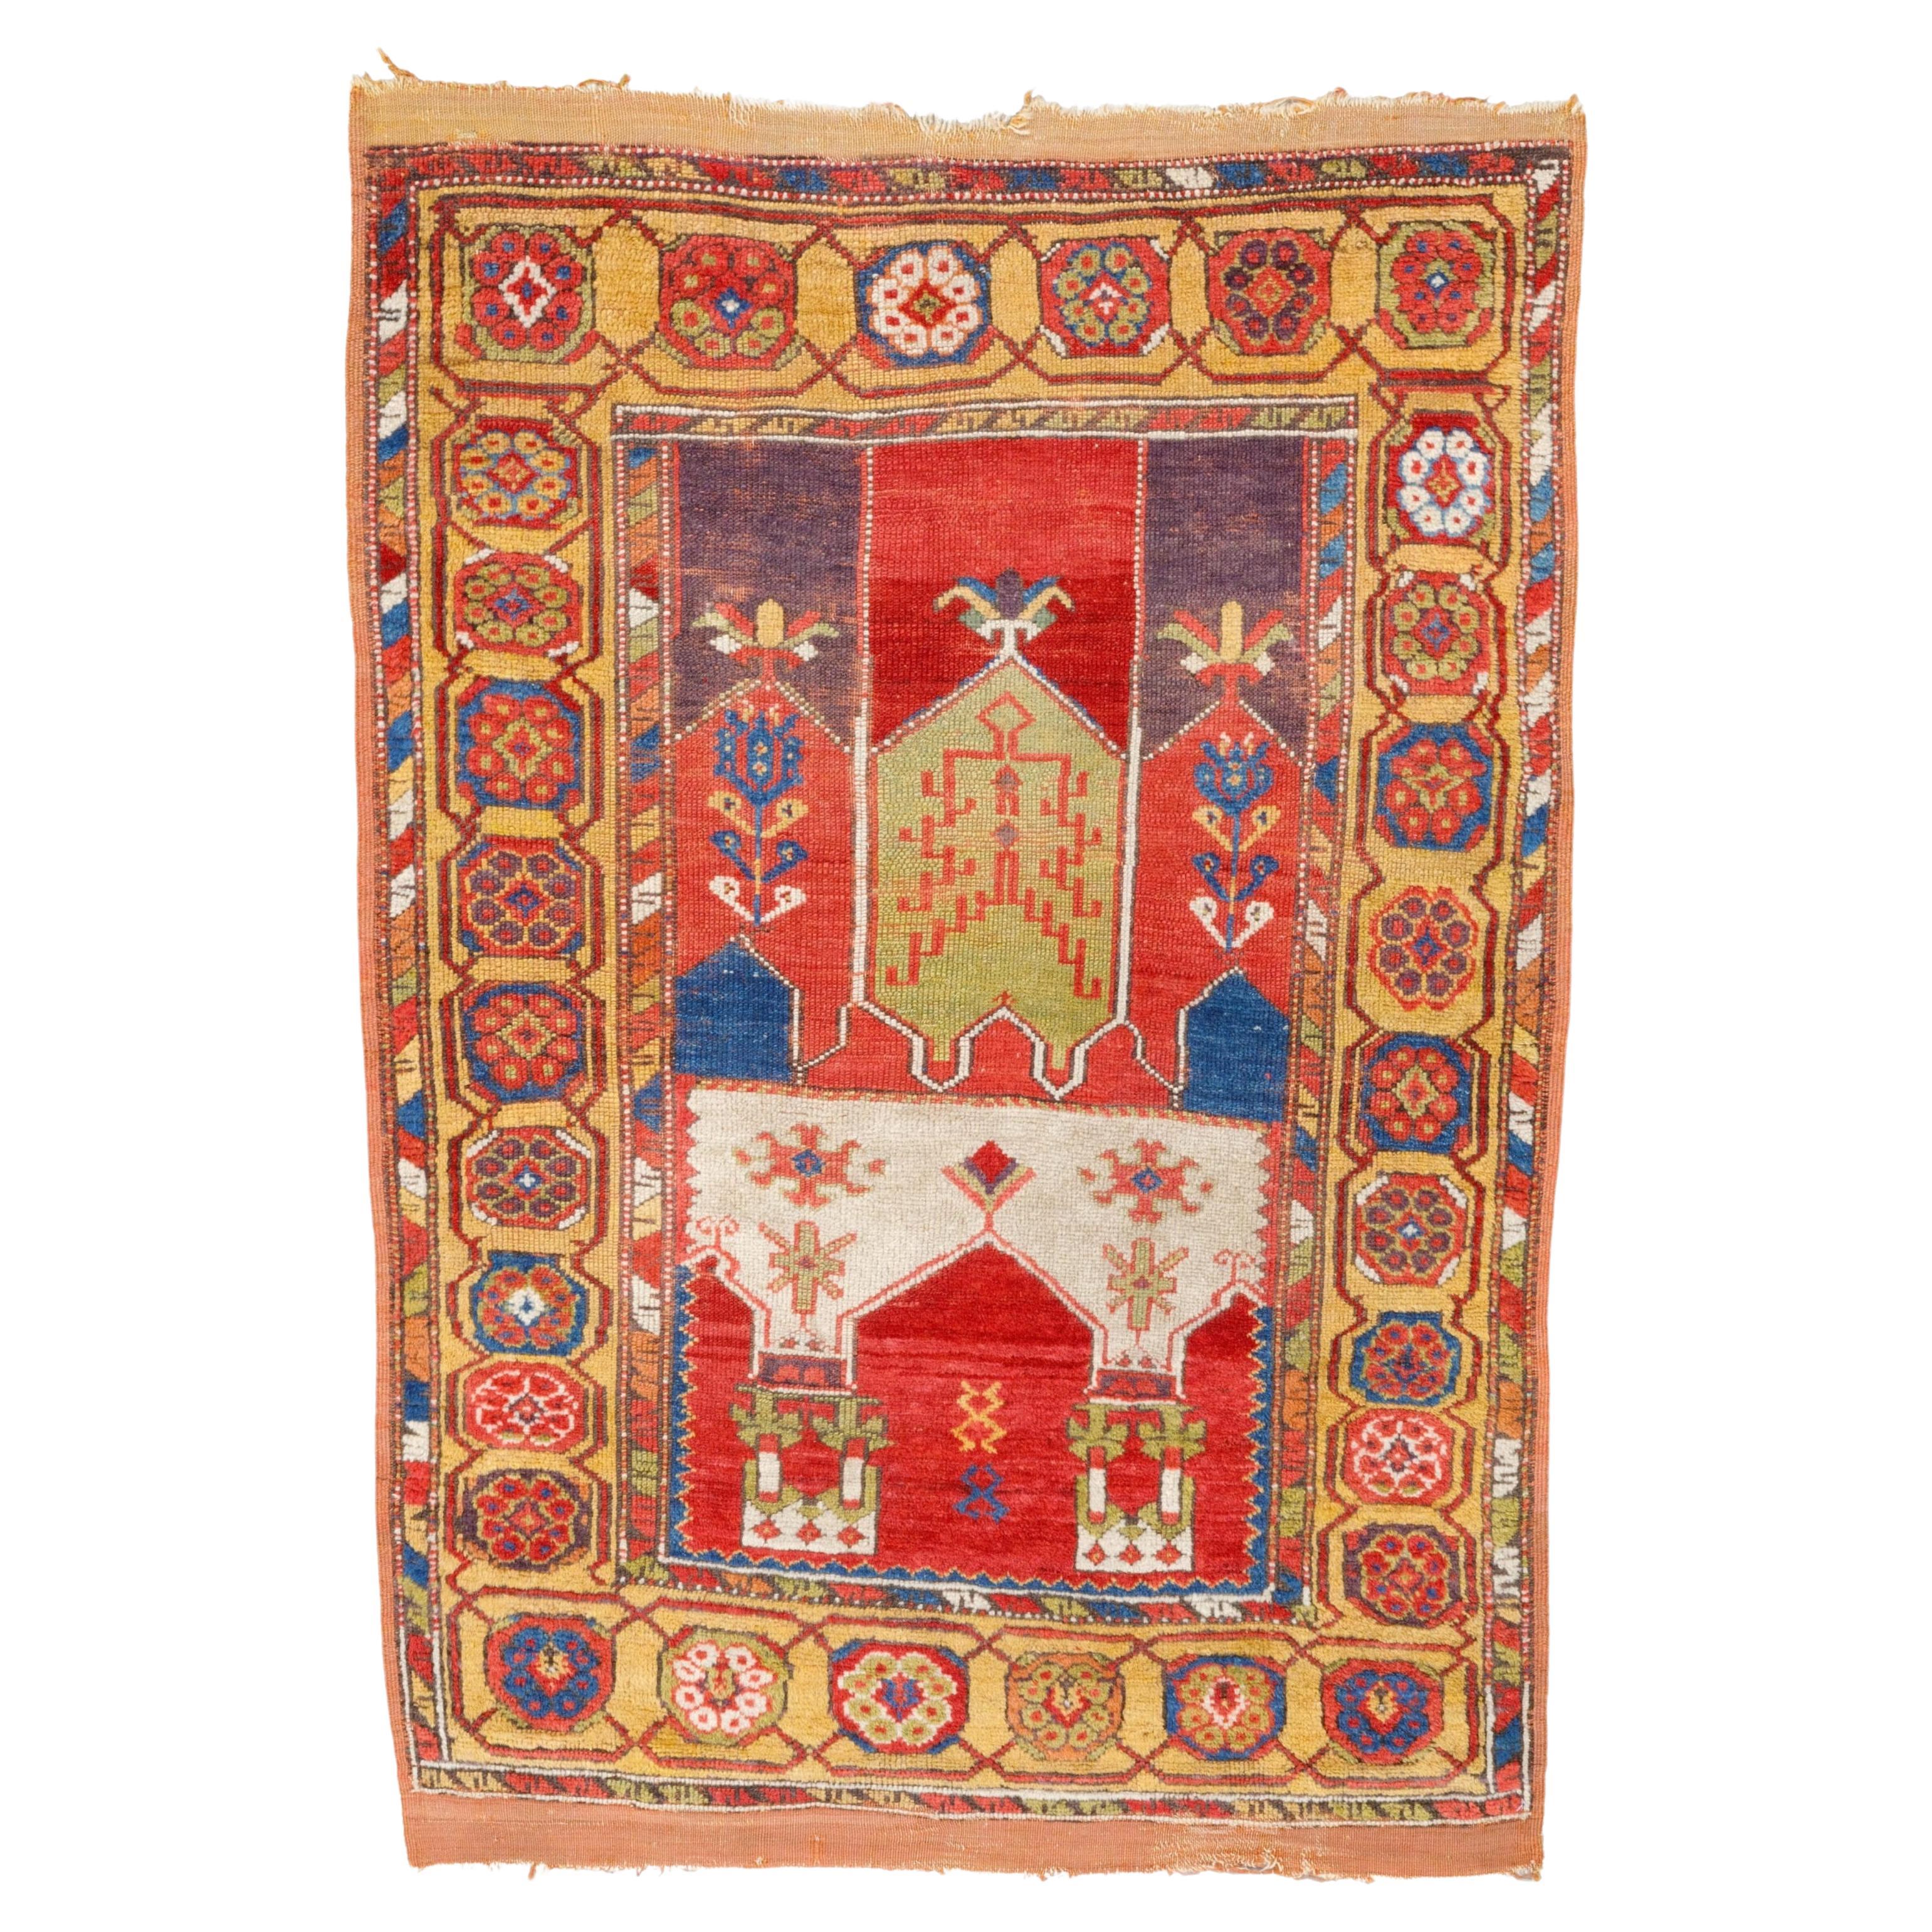 Antique Konya Prayer Rug - Early 19th Century Central Anatolian Konya Prayer Rug